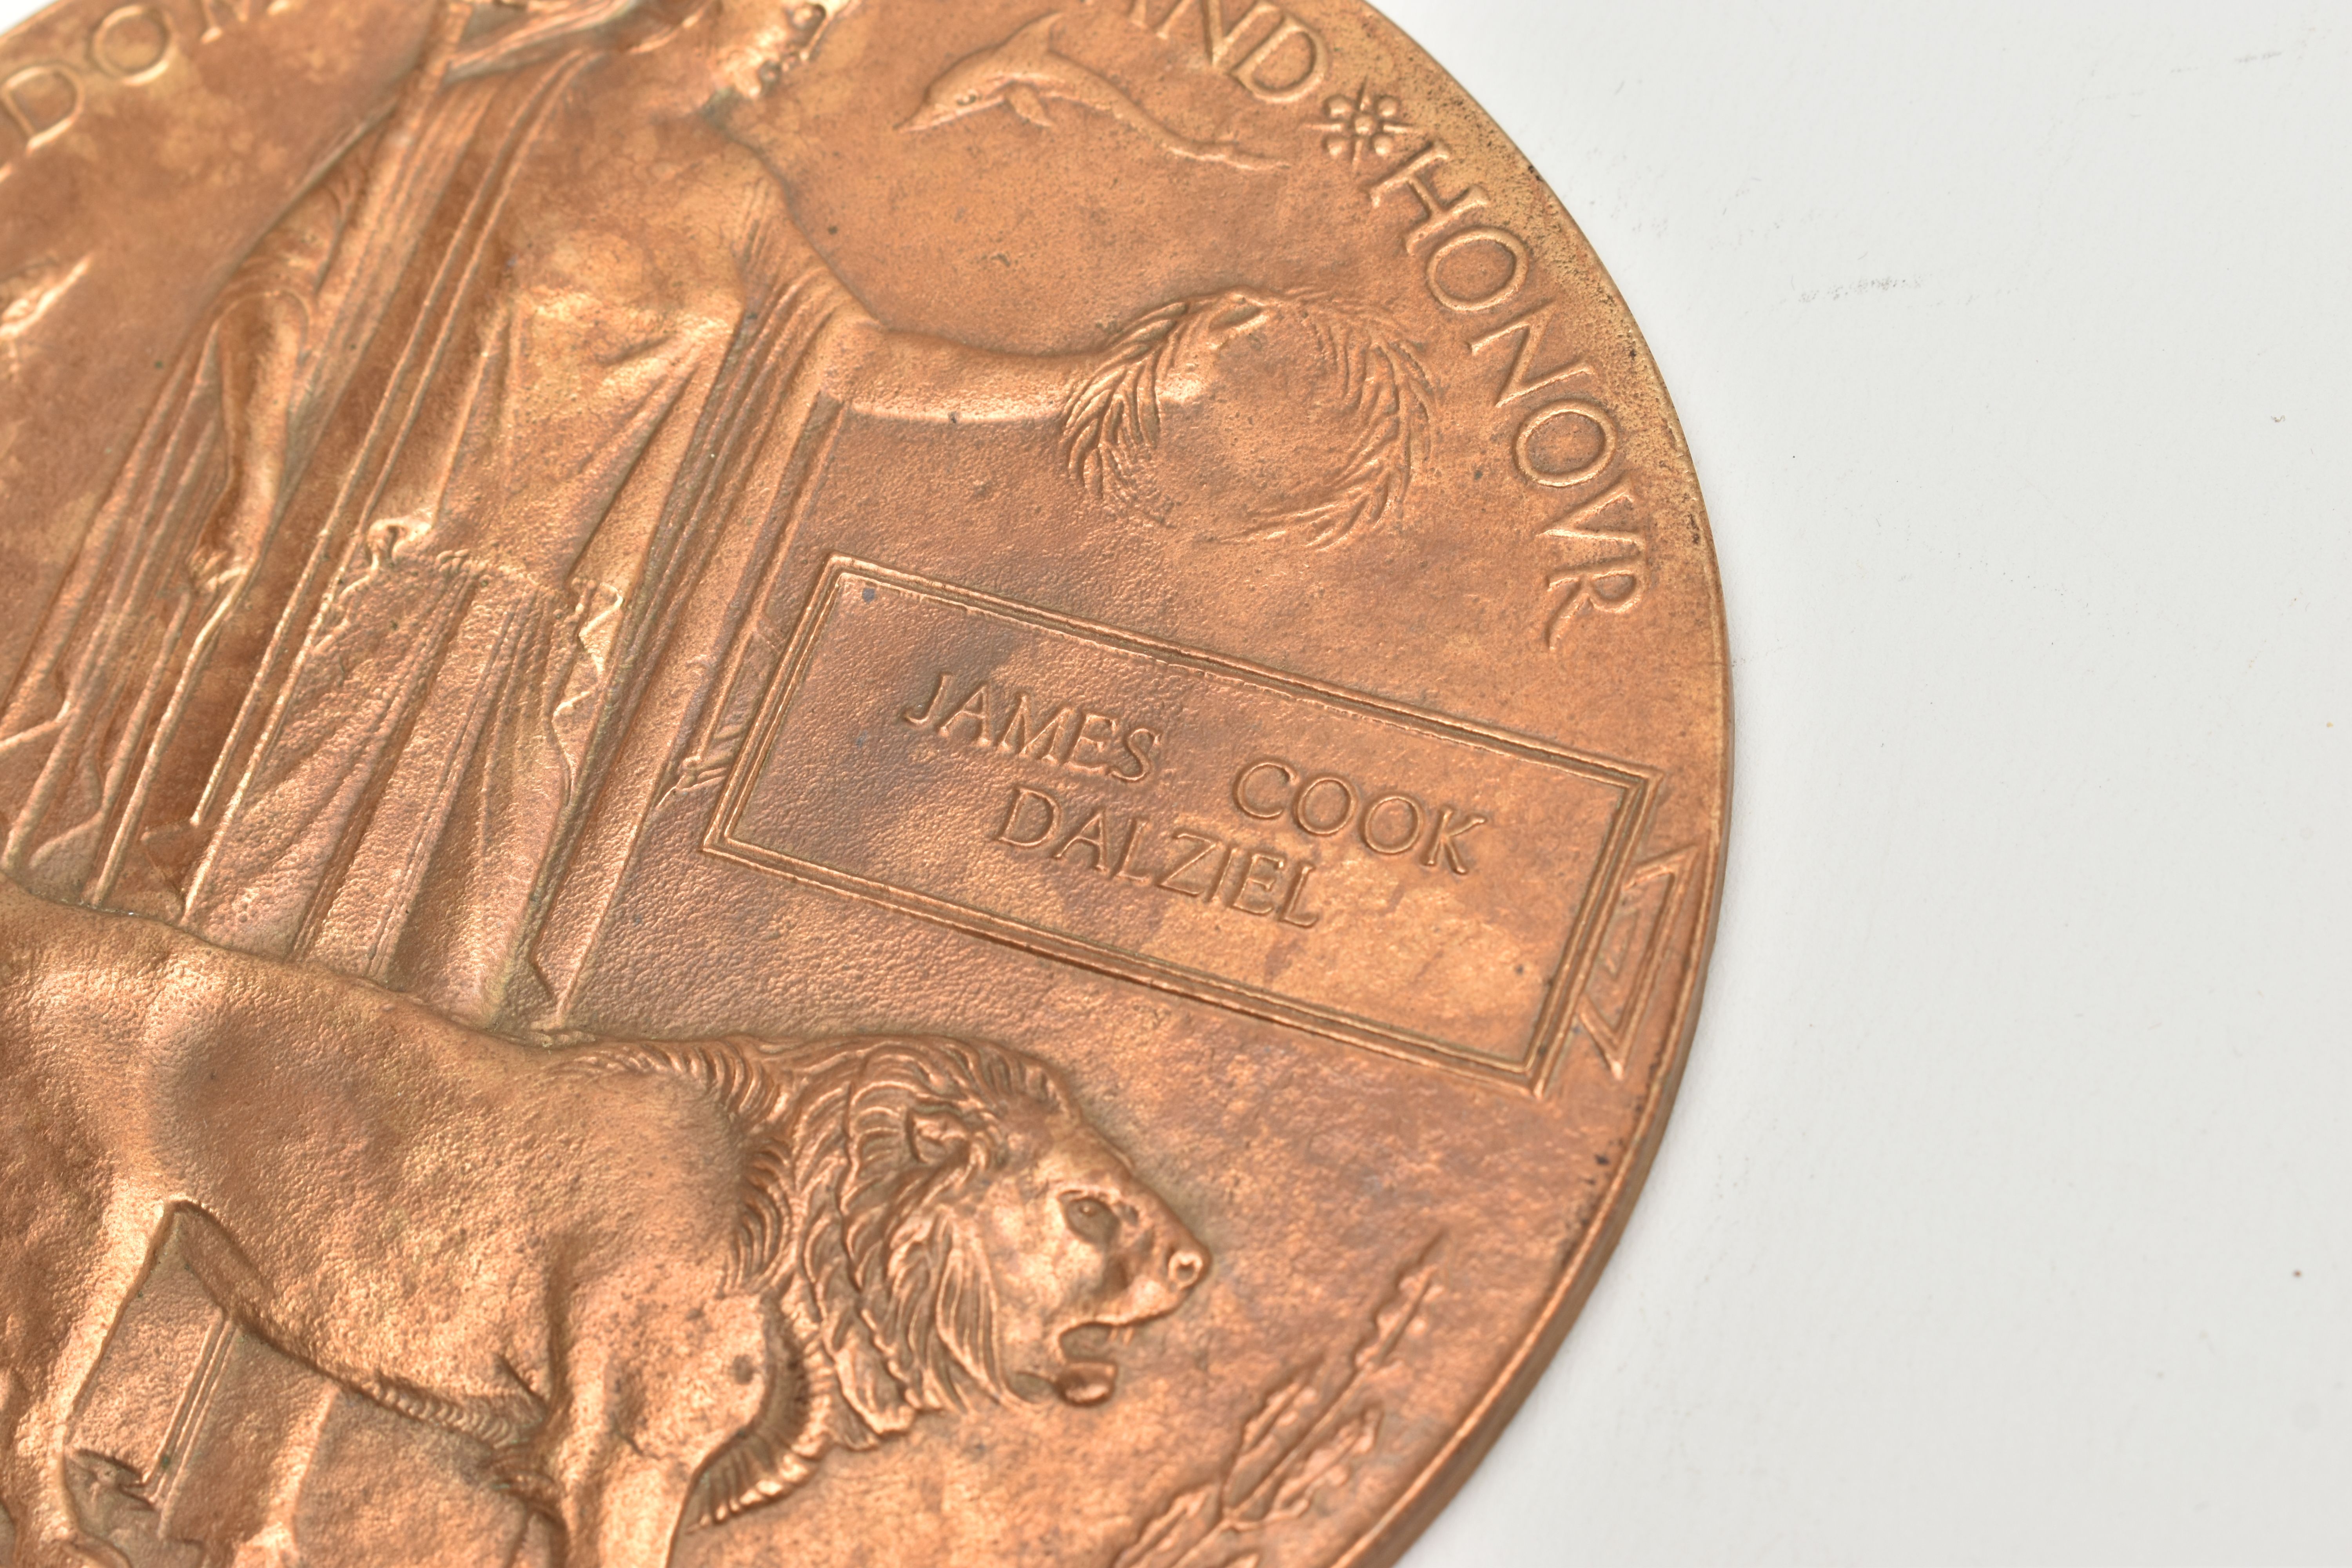 A WWI DEATH PLAQUE, bronze plaque dedicated to James Cook Daiziel, - Image 2 of 2